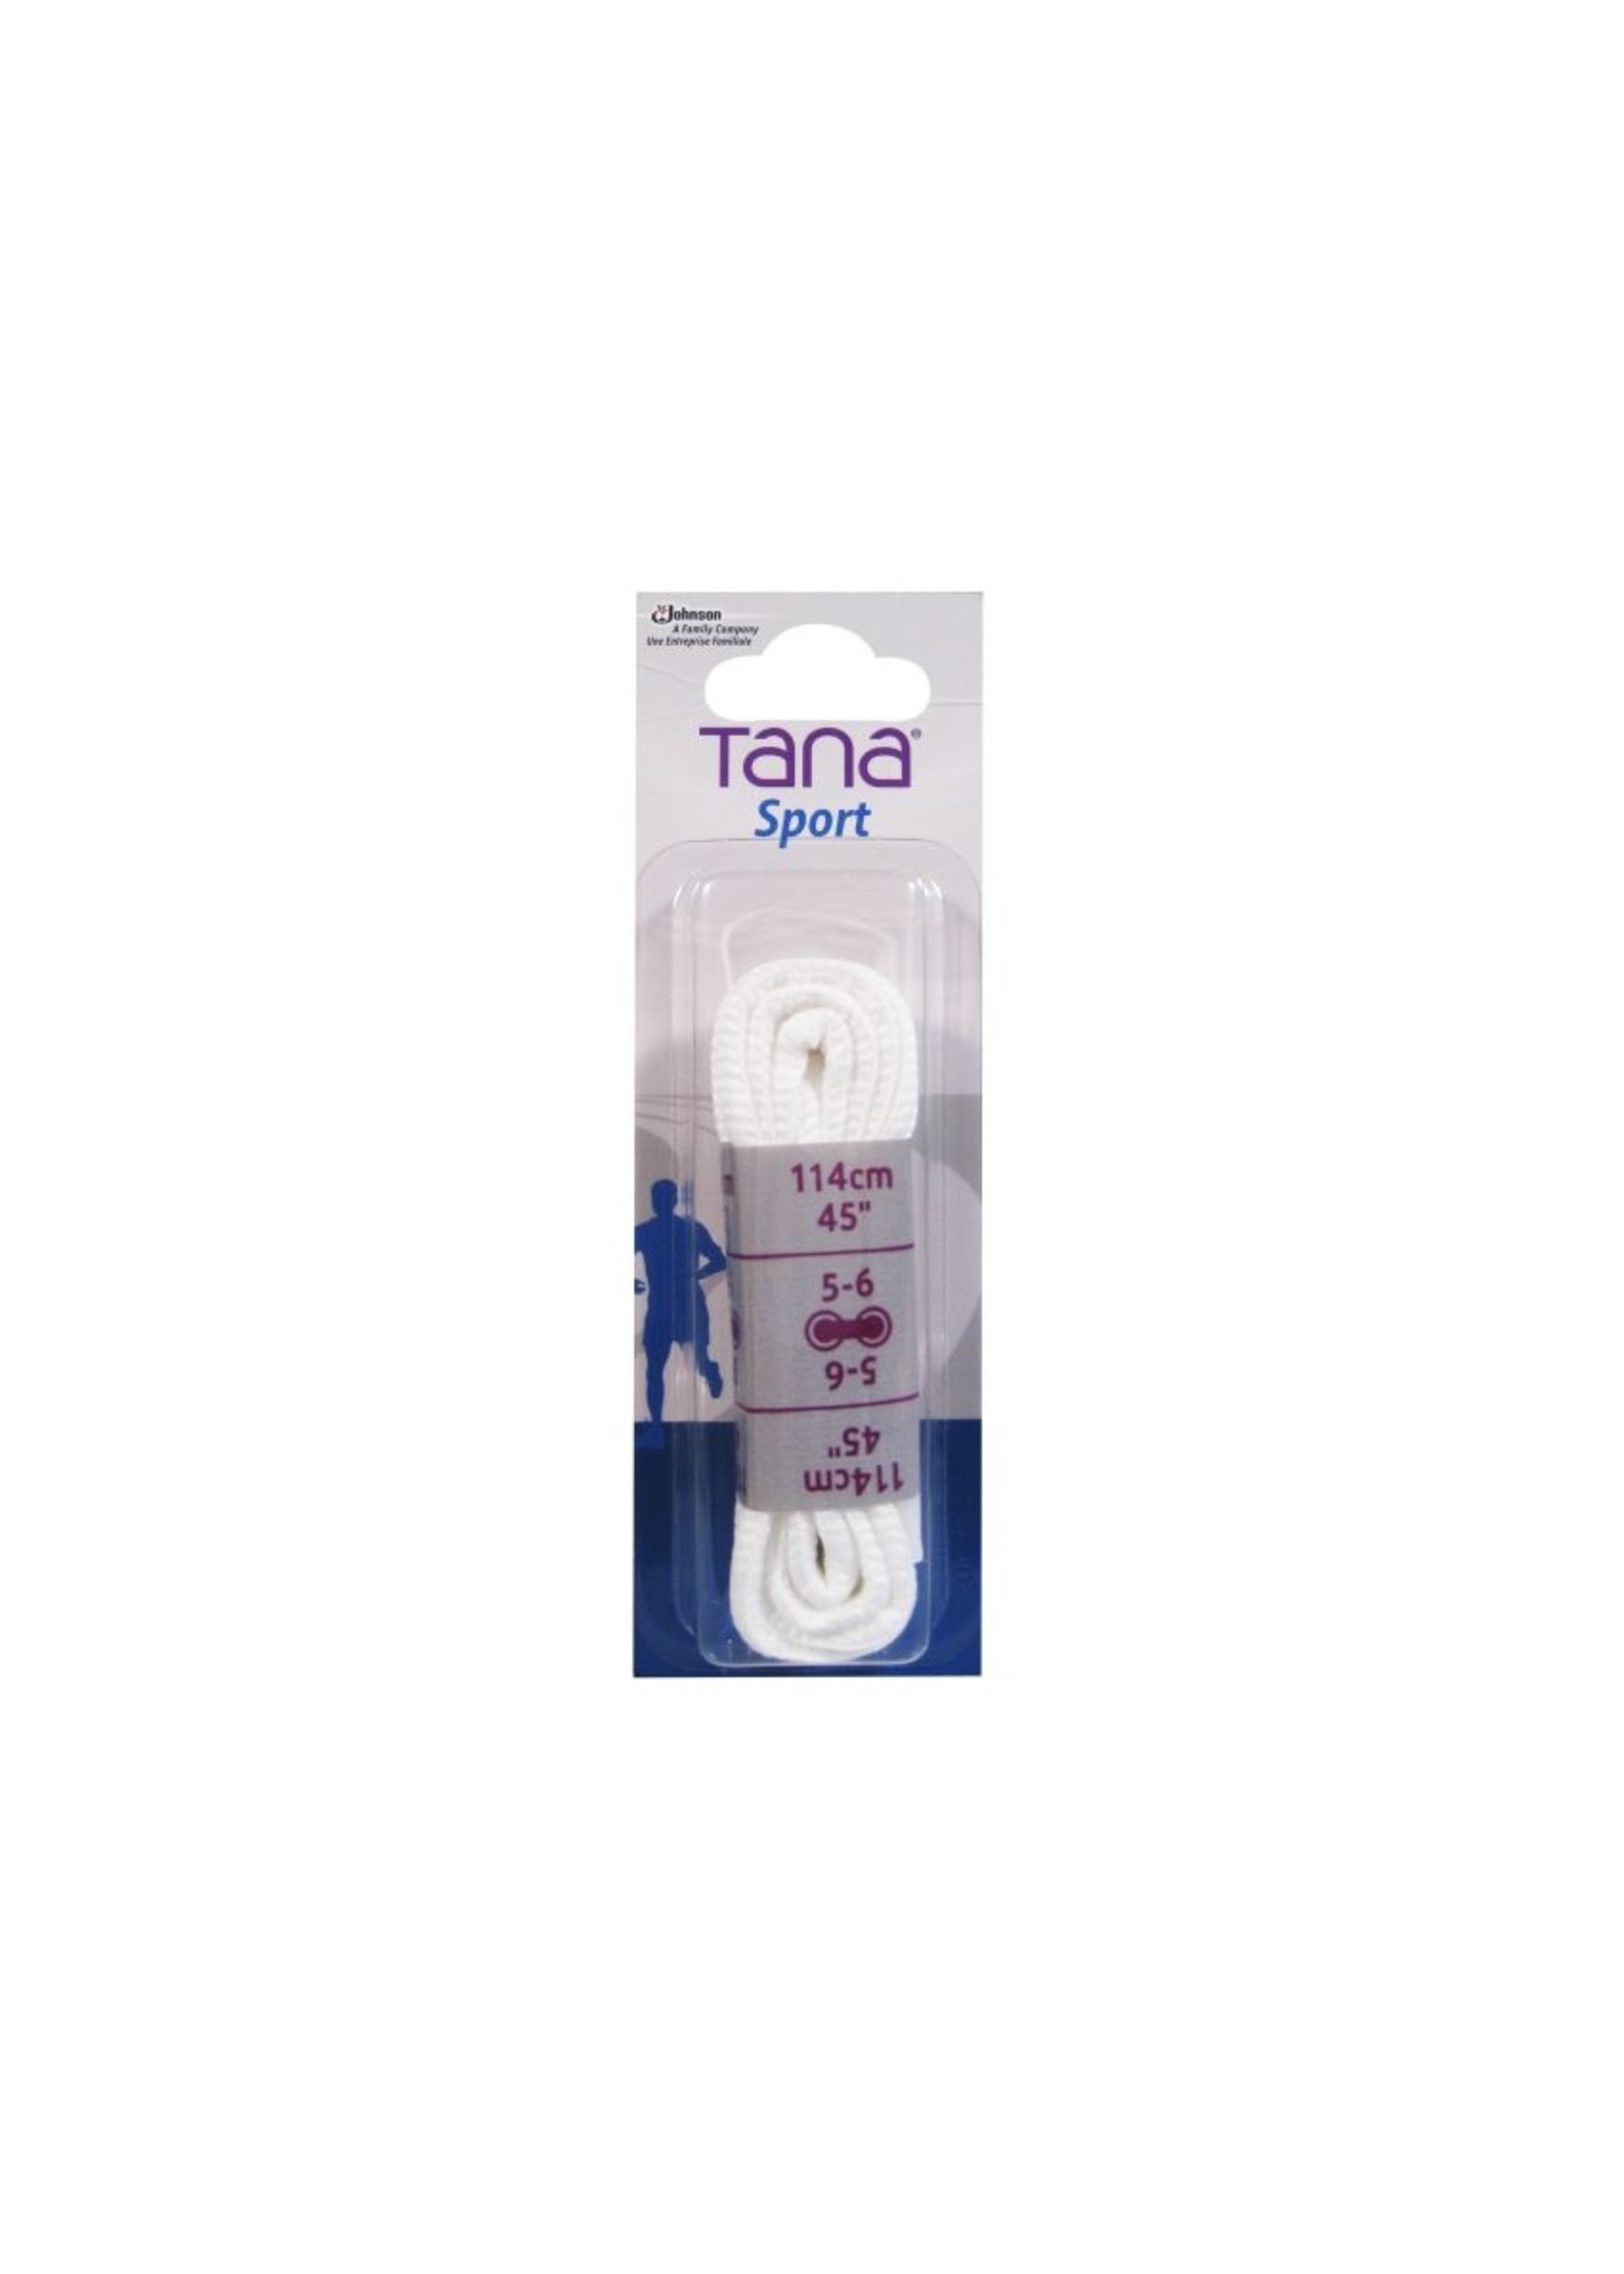 Tana Sport Flat White Laces 45"